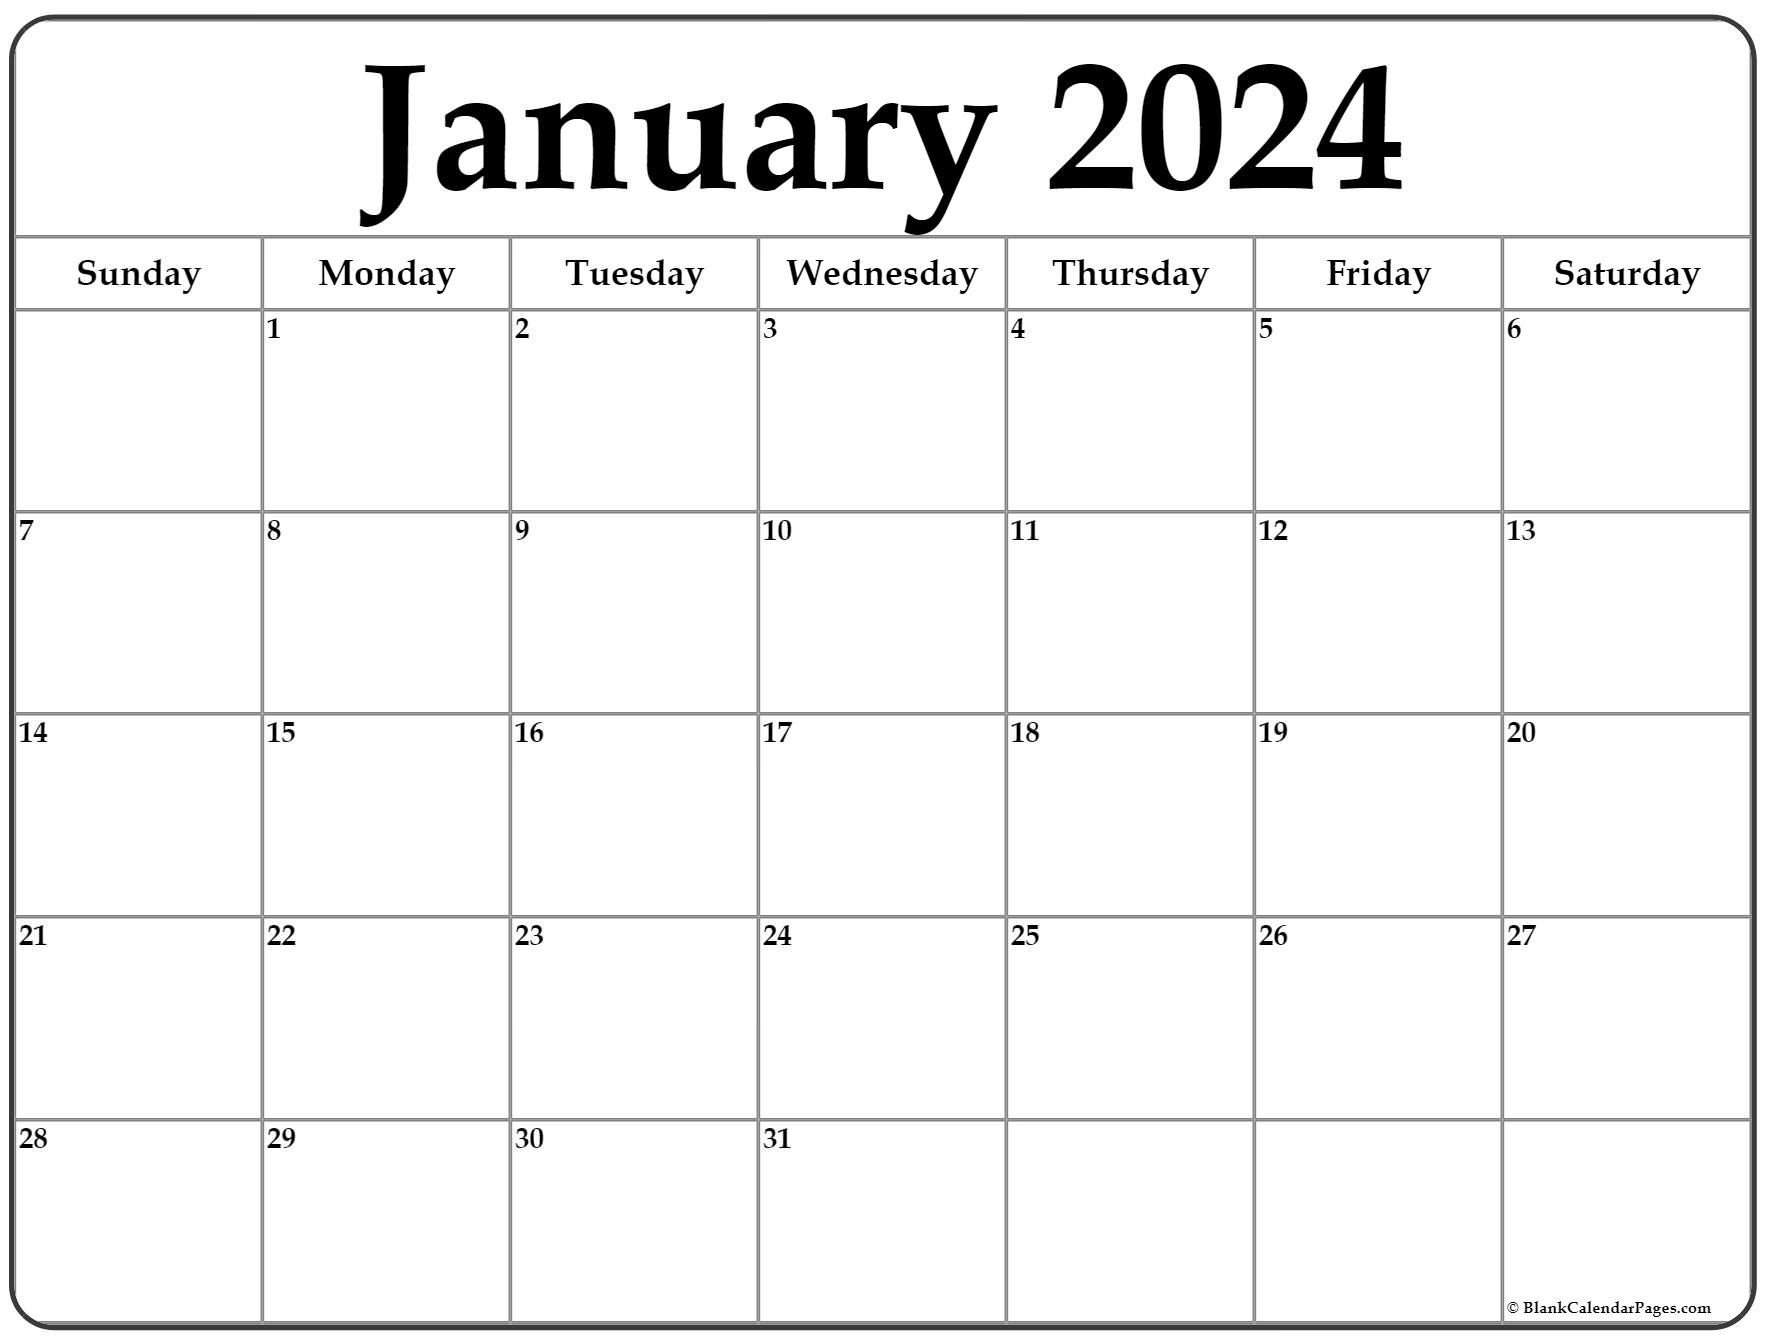 Monthly Blank Calendar 2022 January 2022 Calendar | Free Printable Calendar Templates